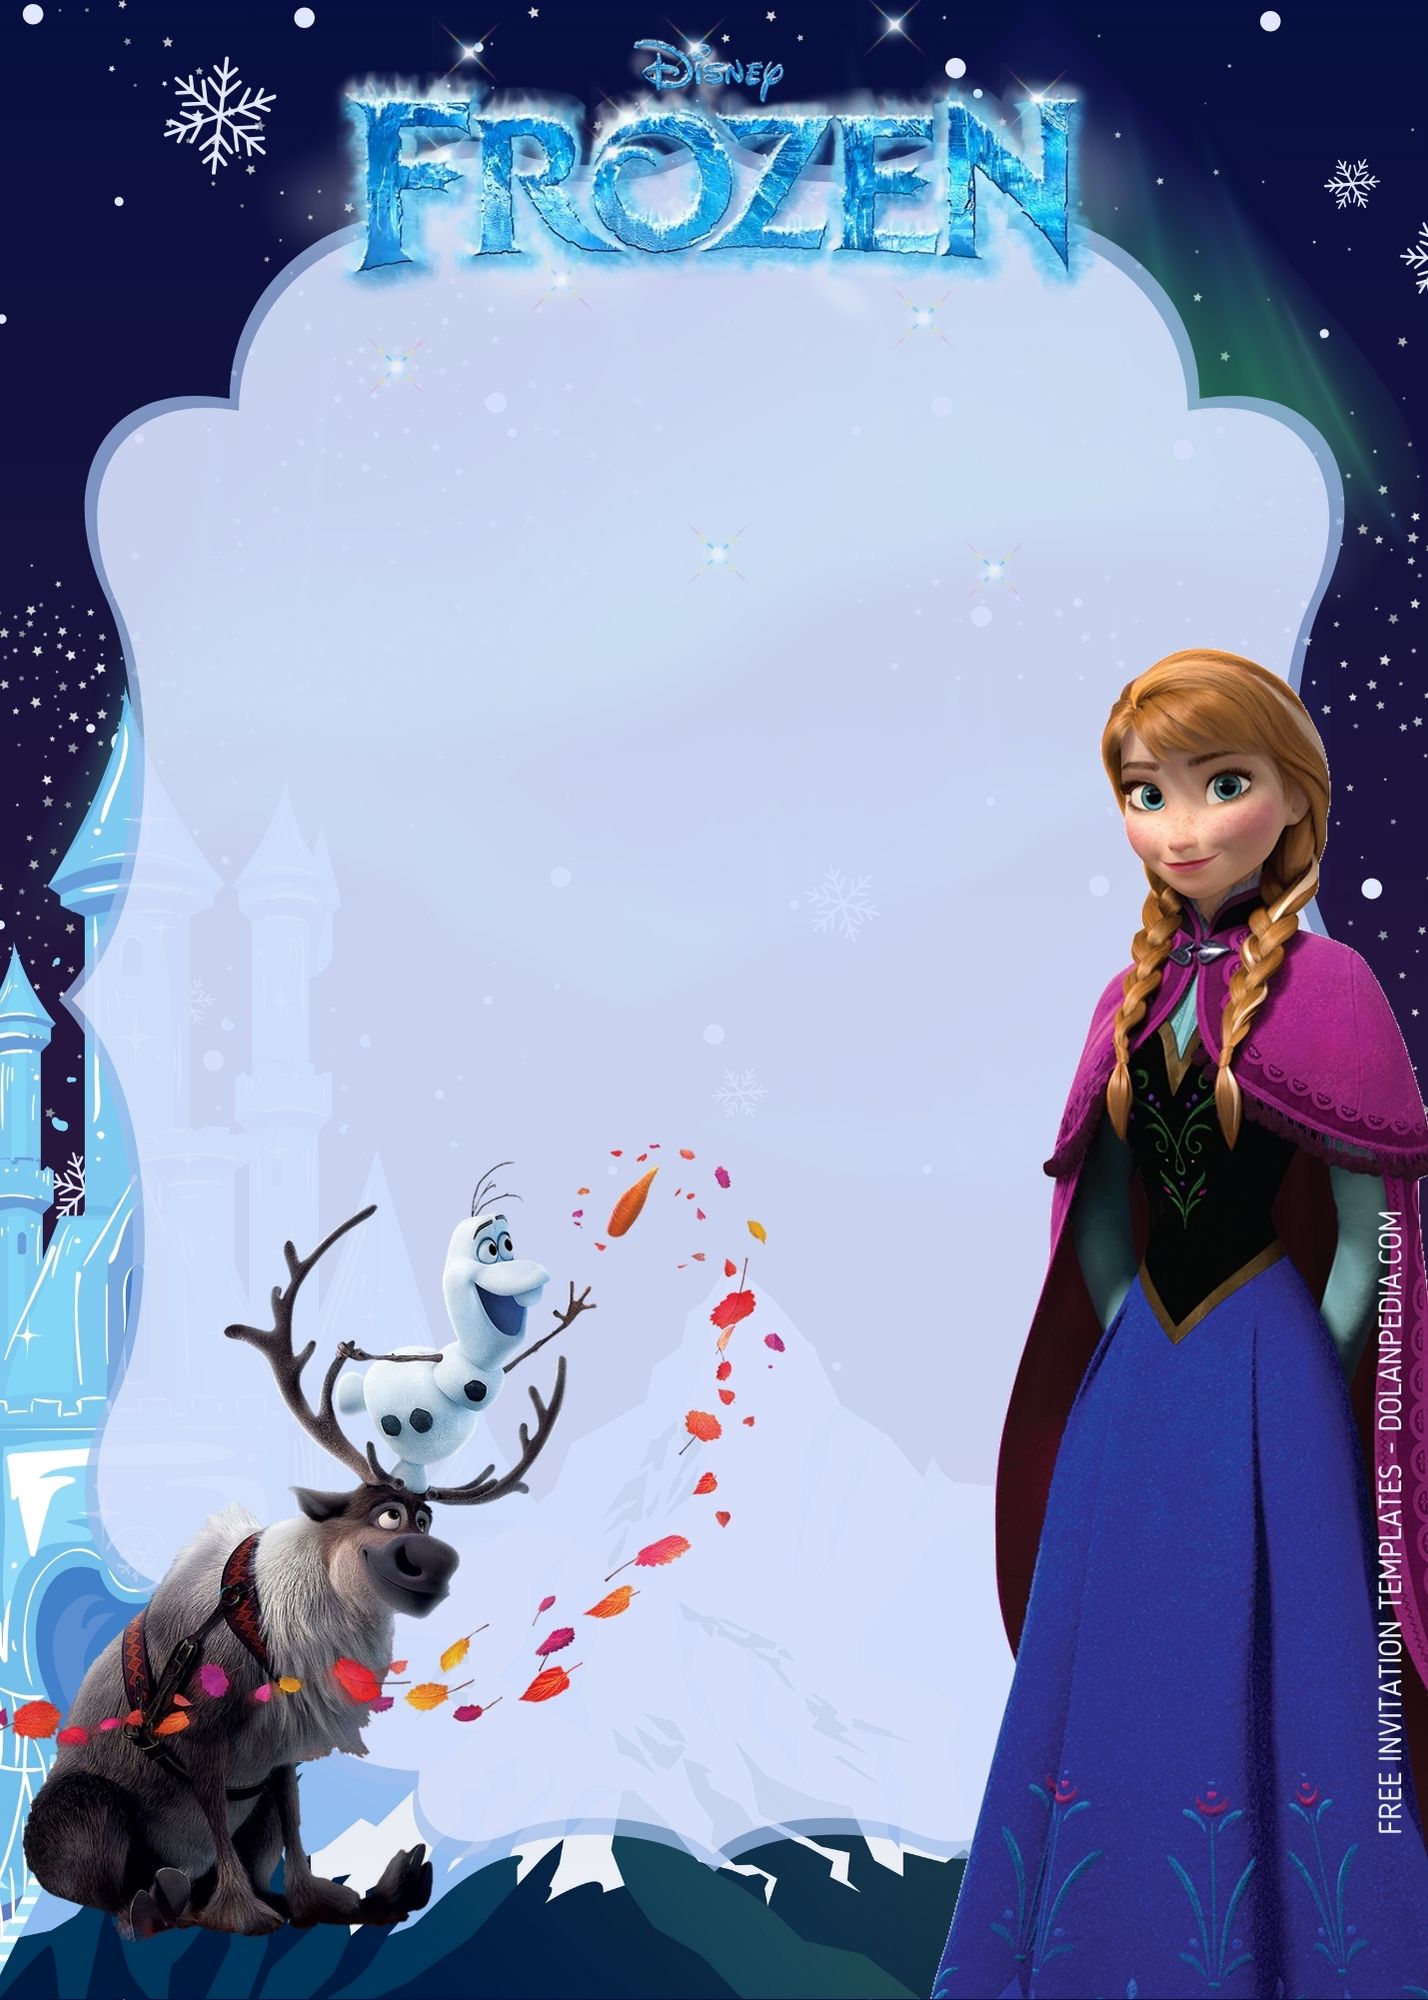 FREE Disney's Frozen Ice Princess Invitation Templates